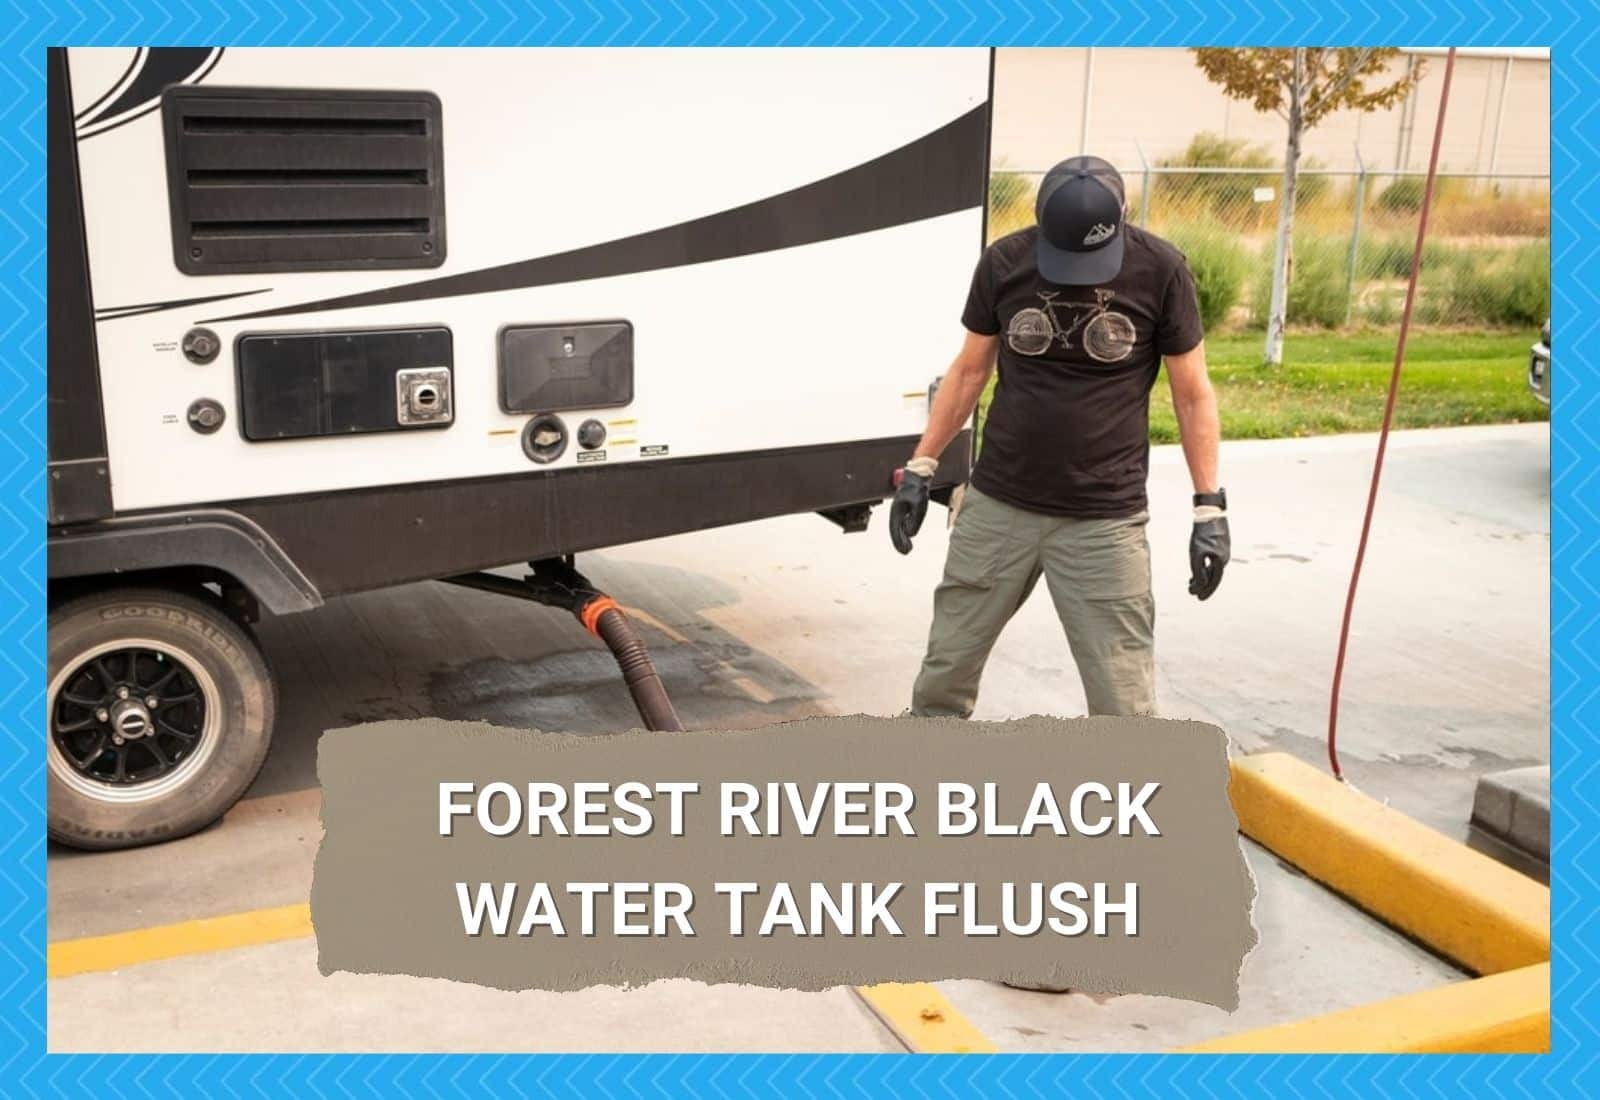 Forest River Black Water Tank Flush